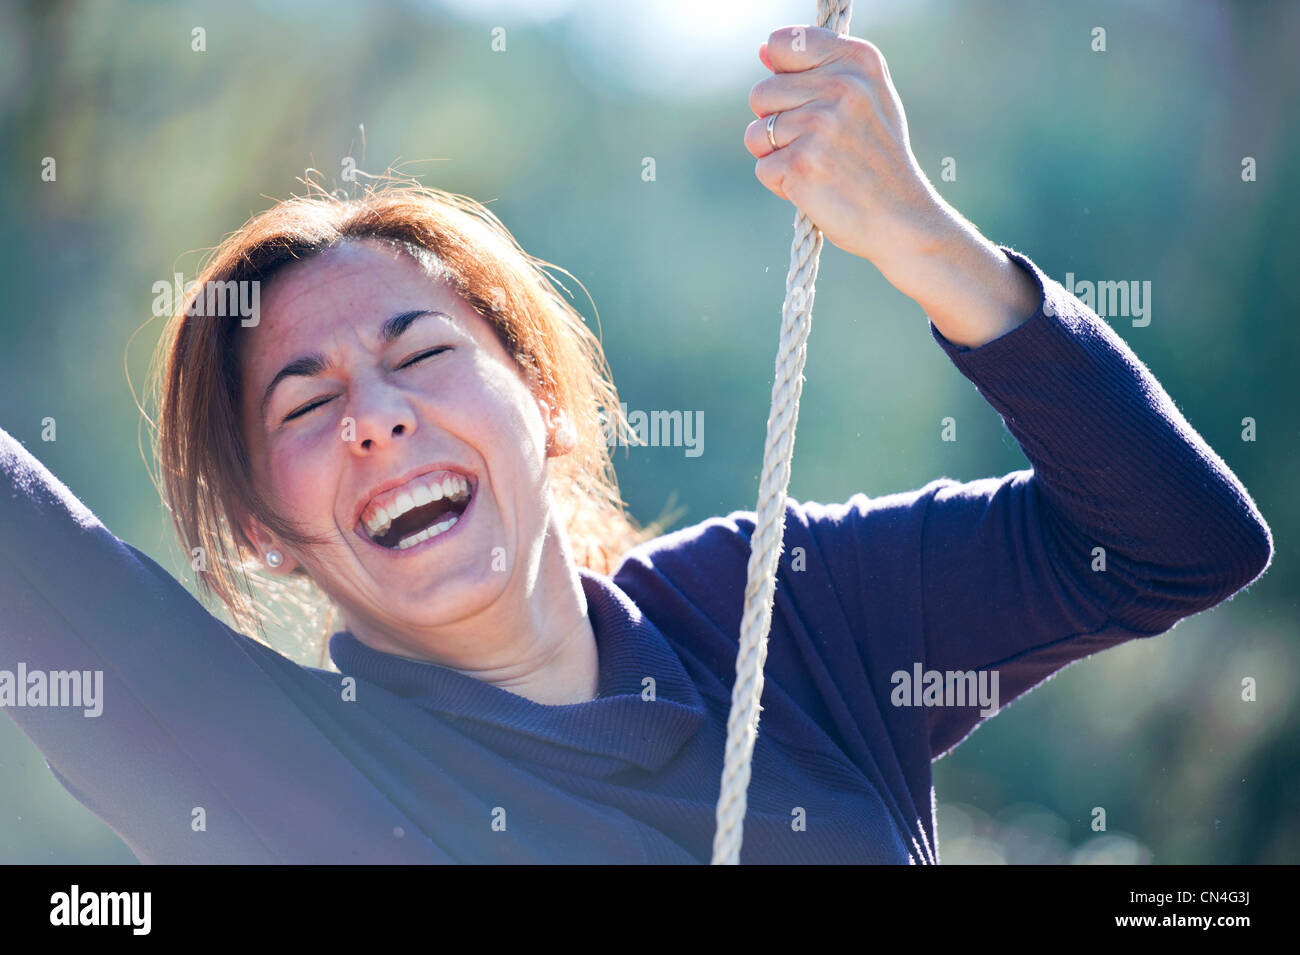 woman having fun with rope Stock Photo